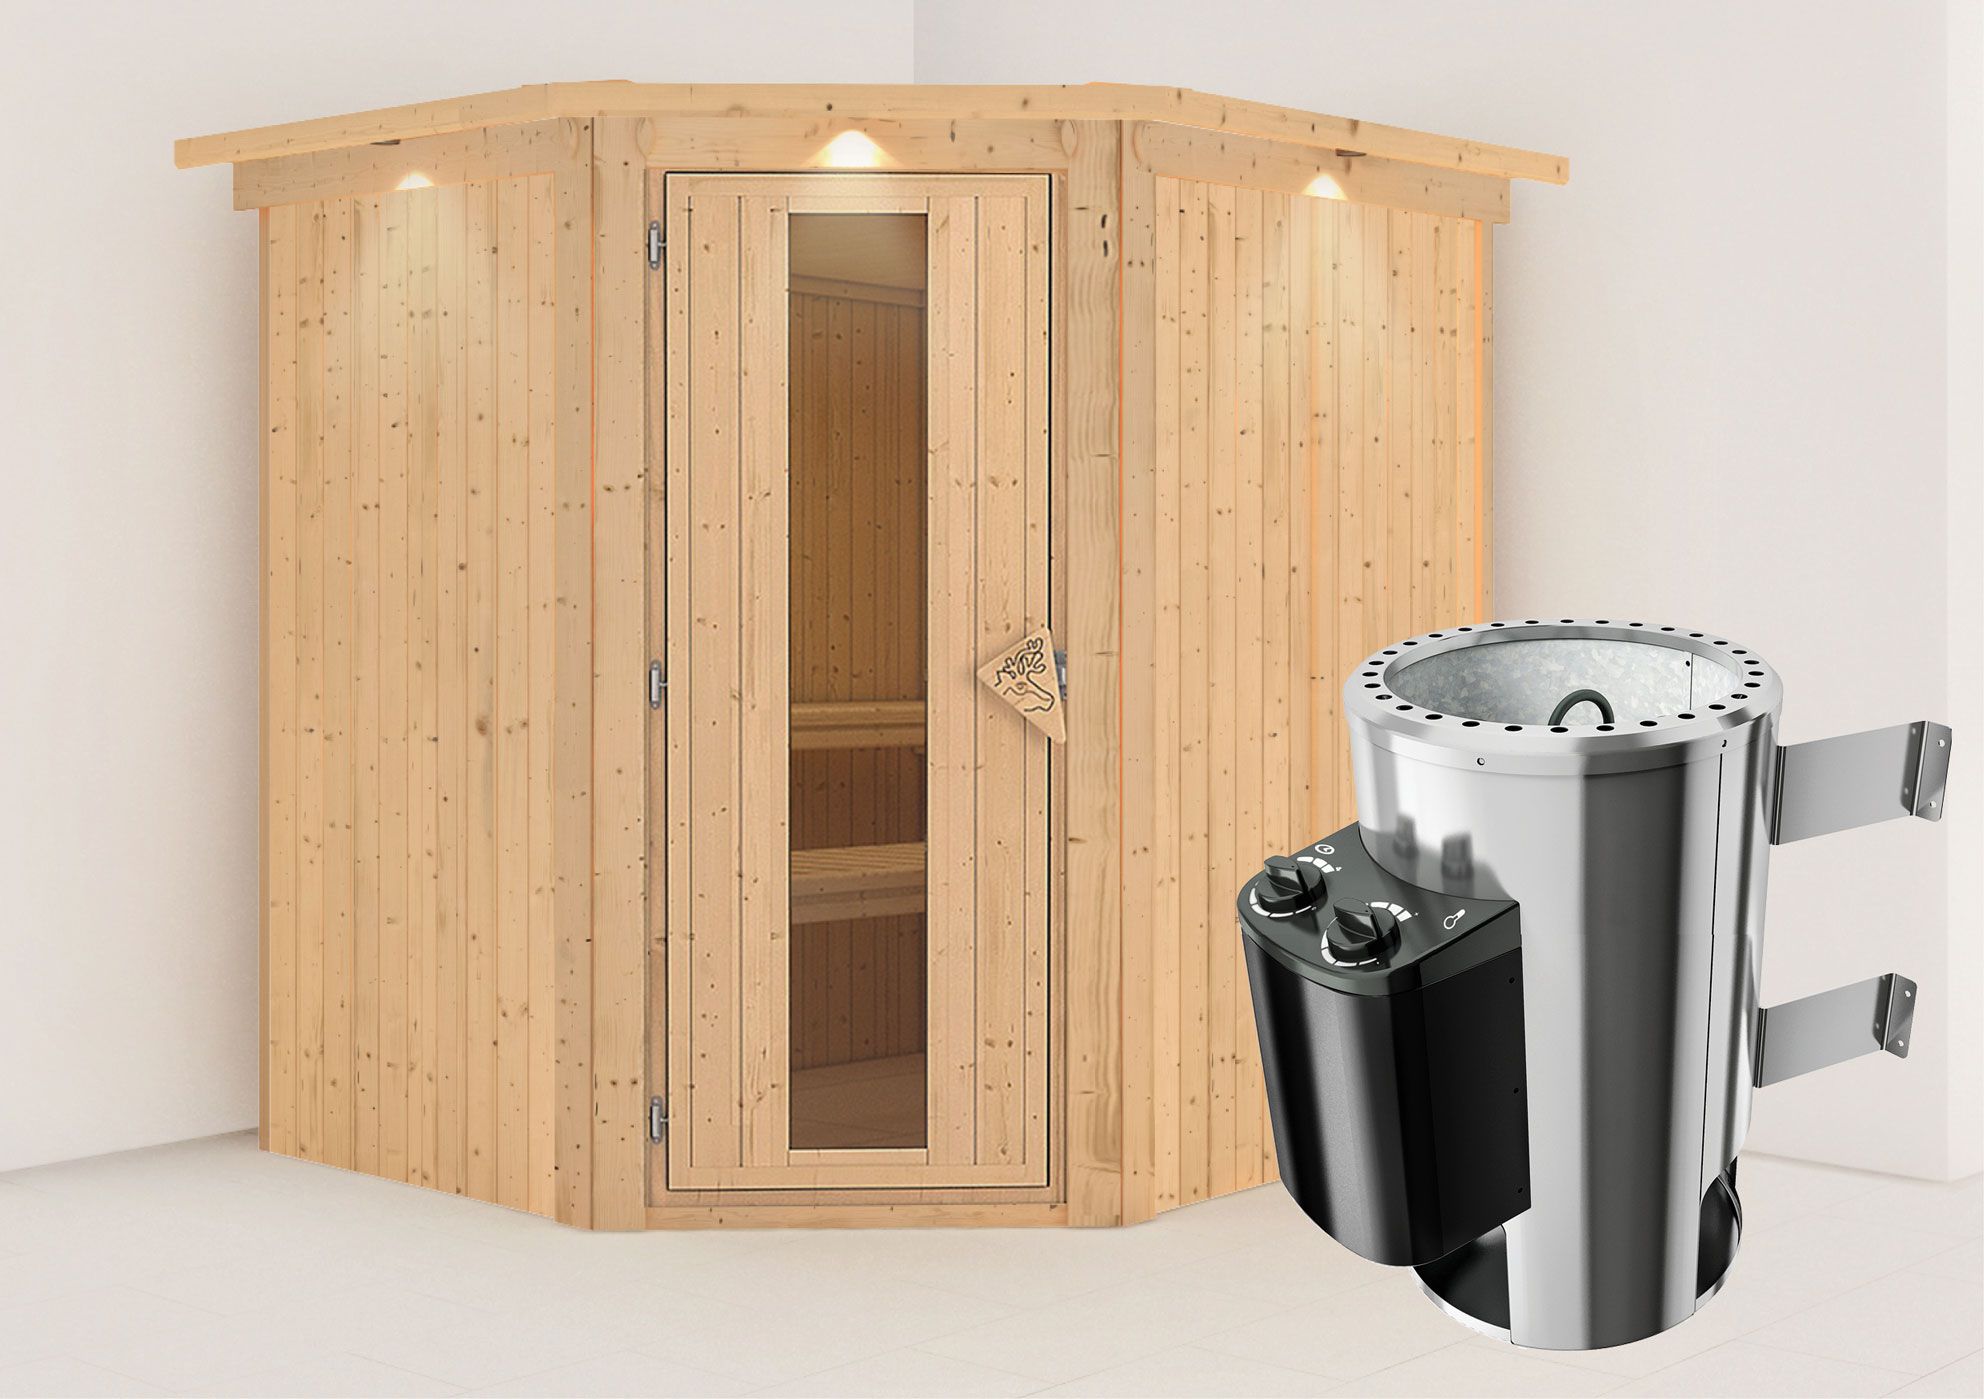 Sauna "Askjell" SET met energiebesparende deur, kroon en kachel 3,6 kW - 210 x 184 x 202 cm (B x D x H)